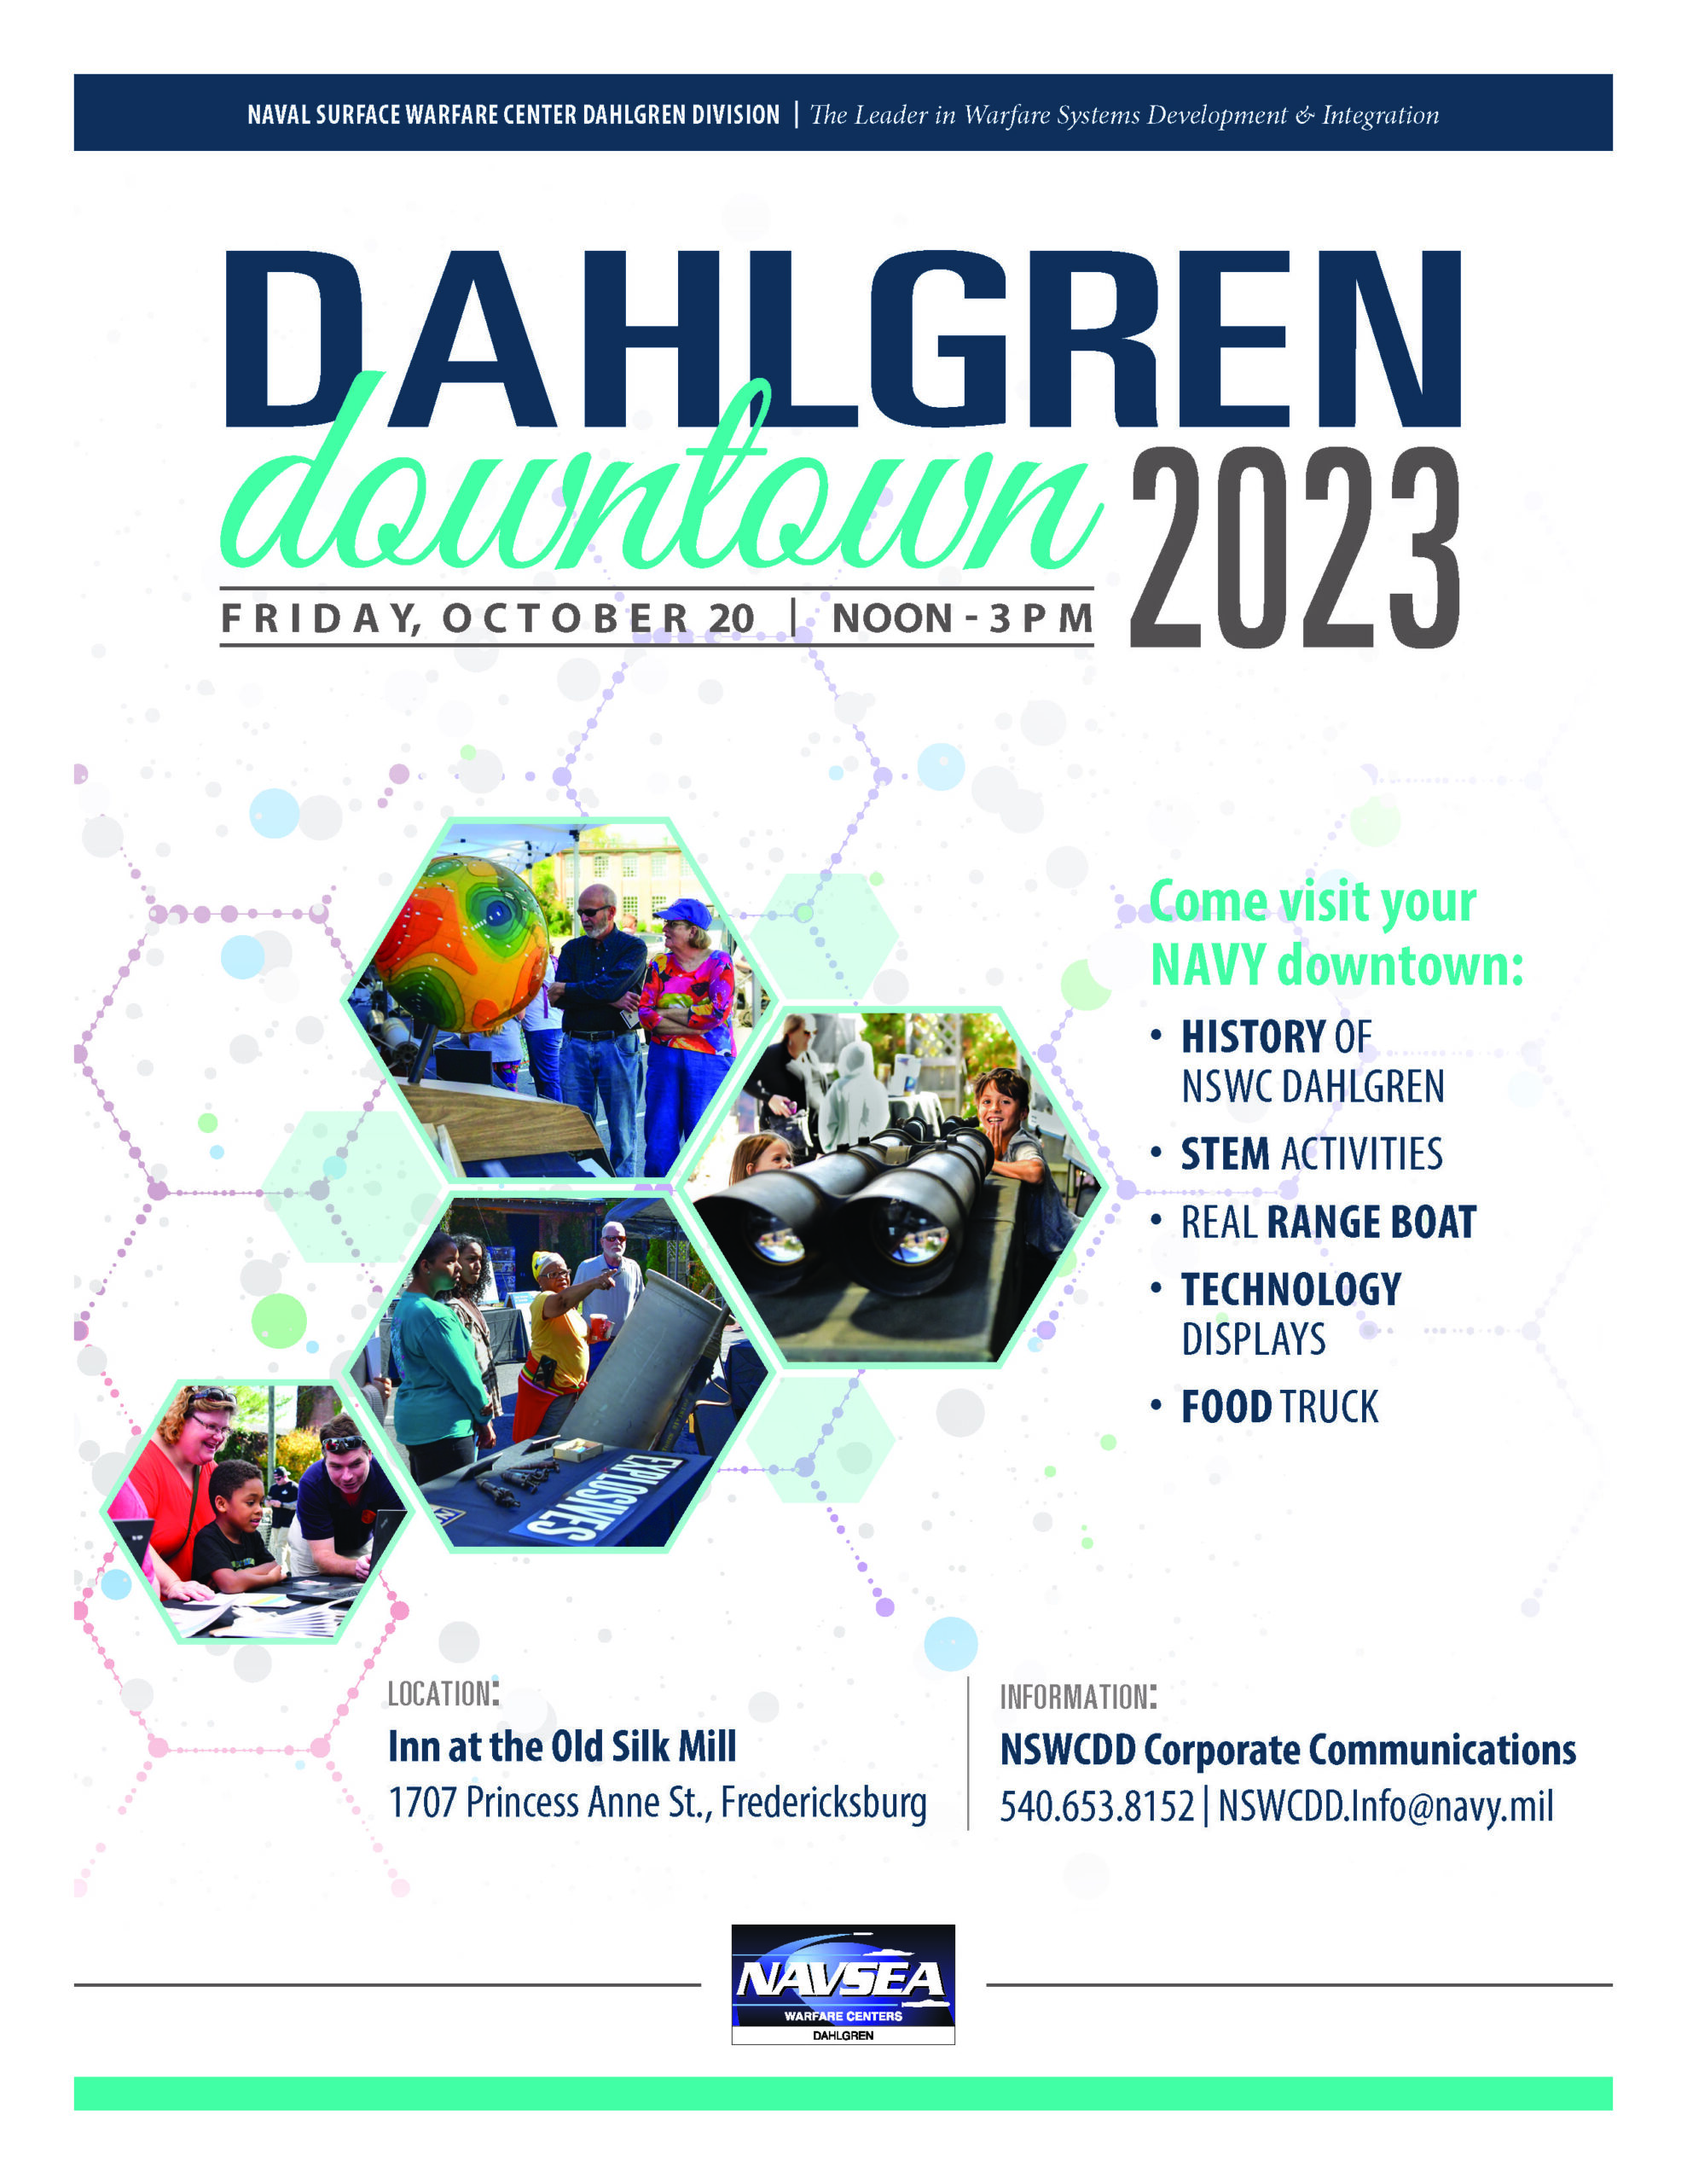 <h1 class="tribe-events-single-event-title">Dahlgren Downtown 2023</h1>